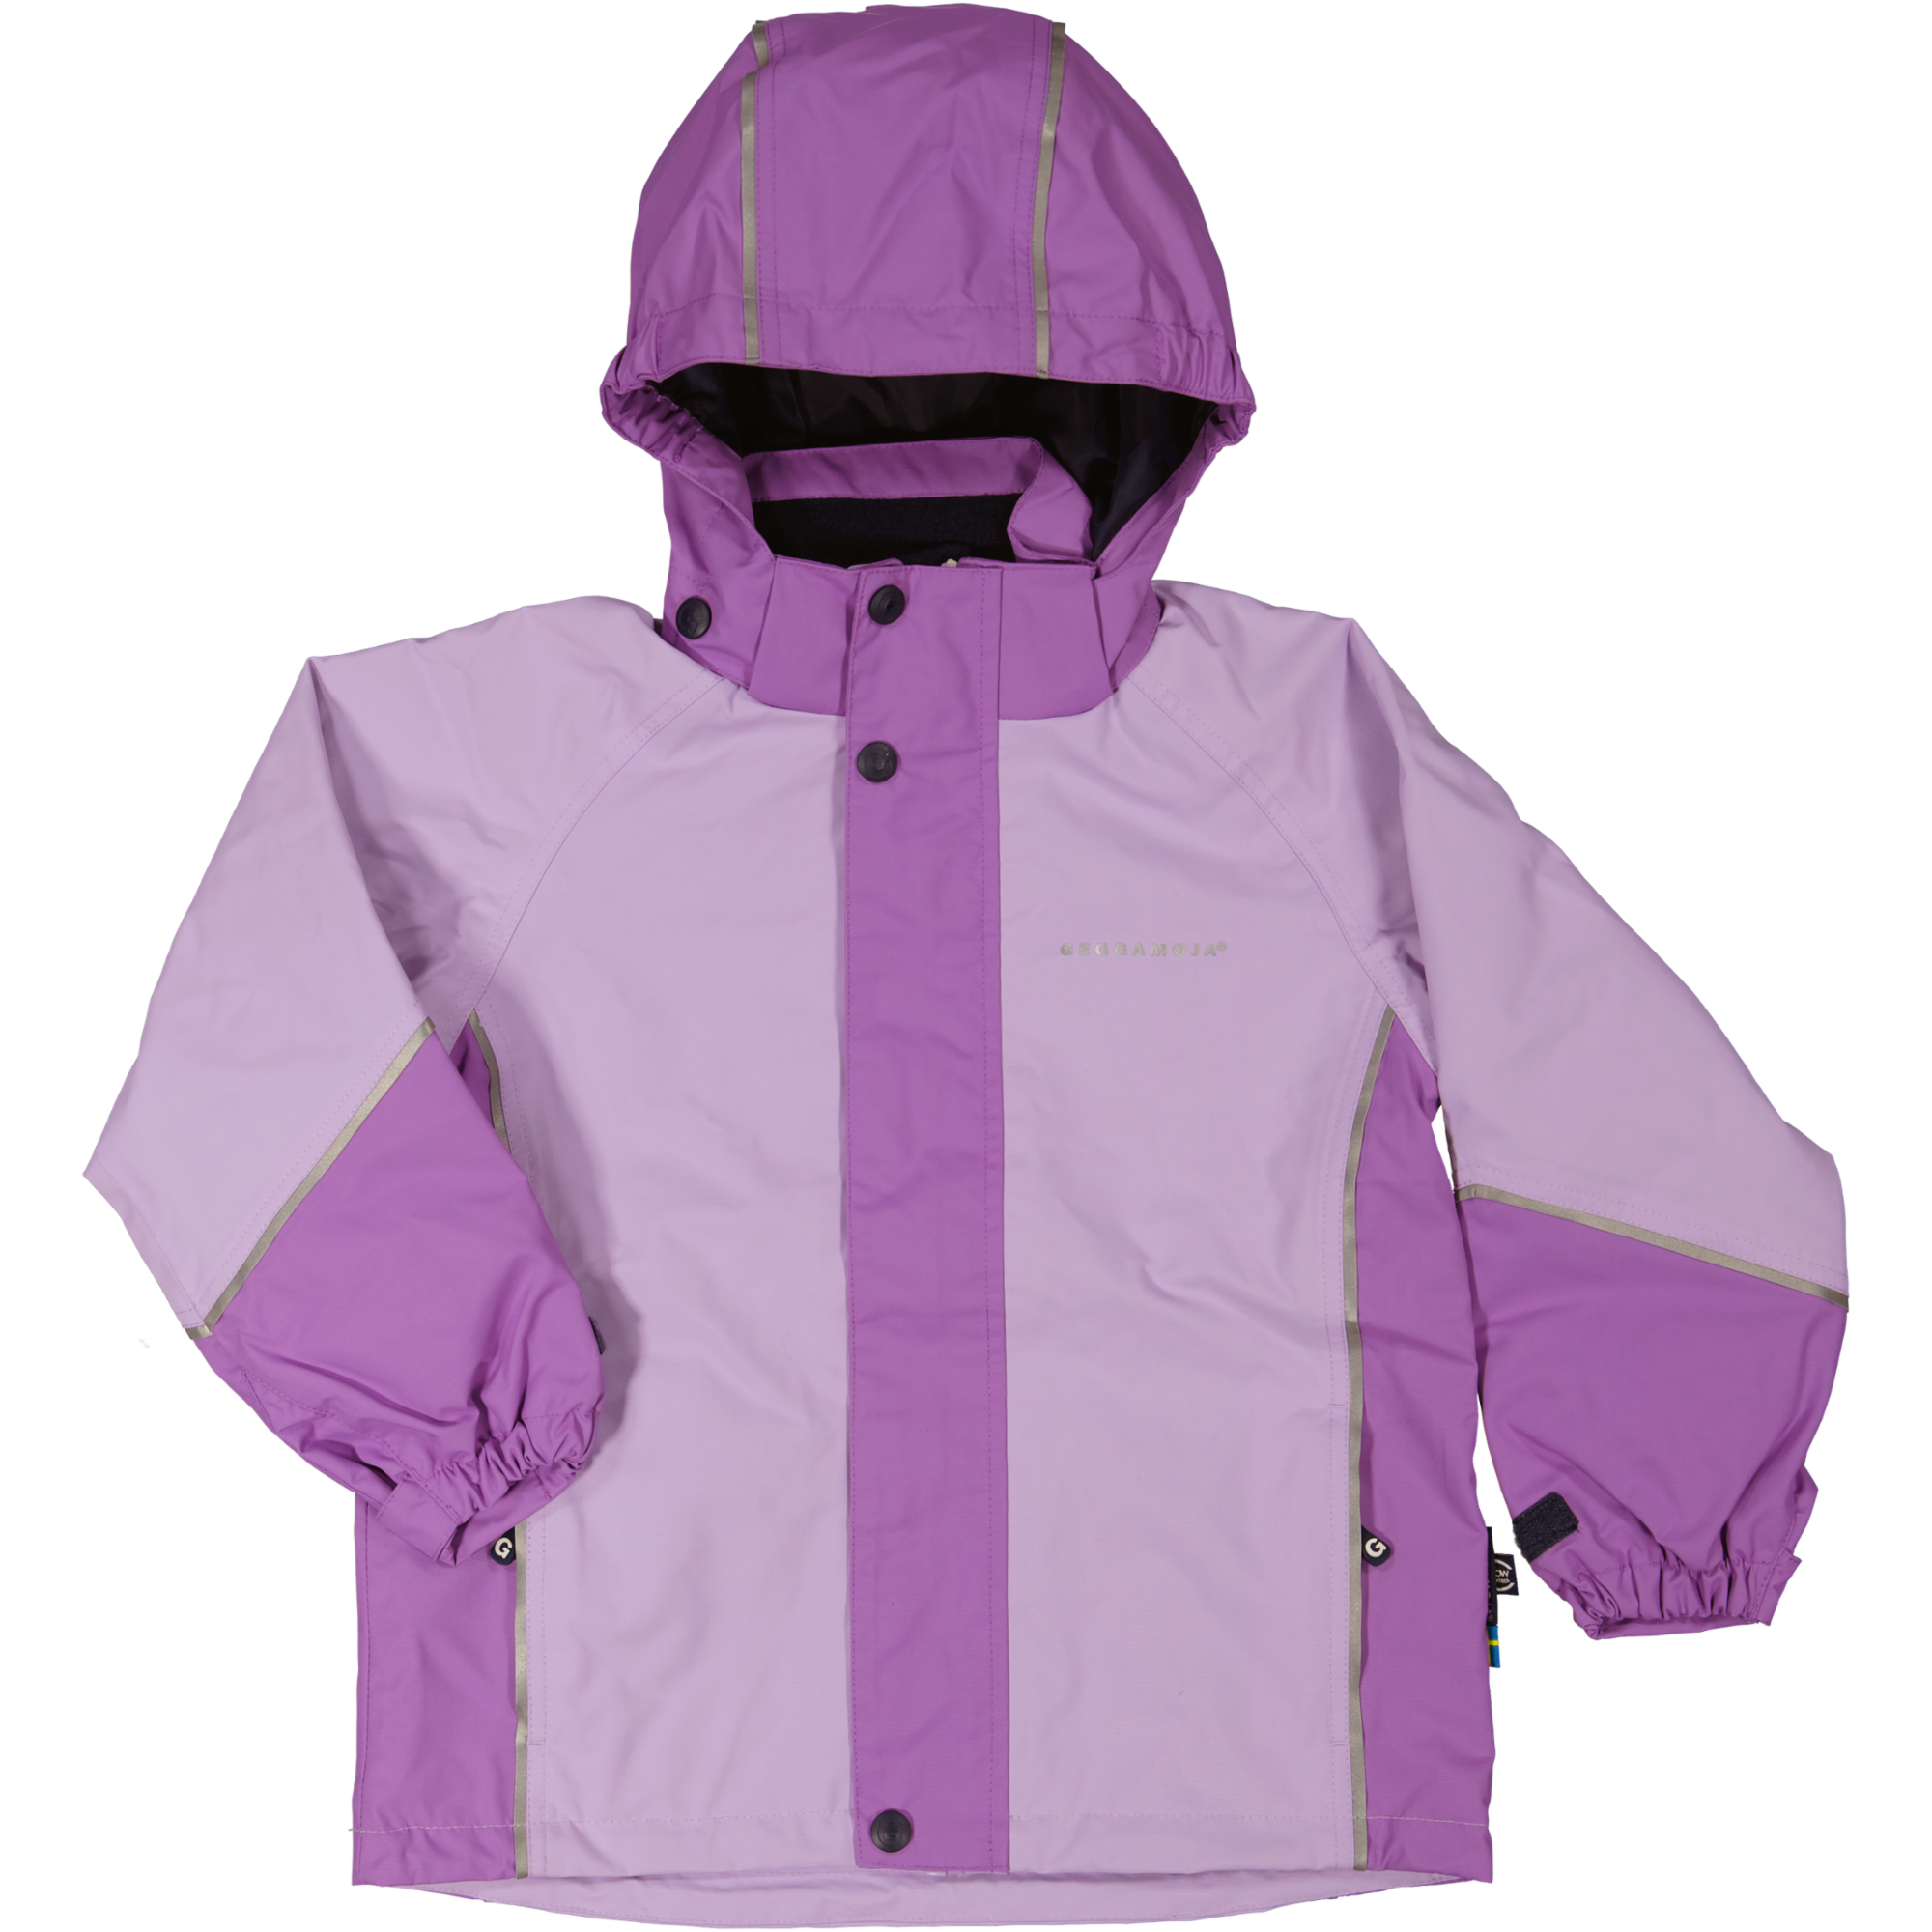 Shell jacket Purple